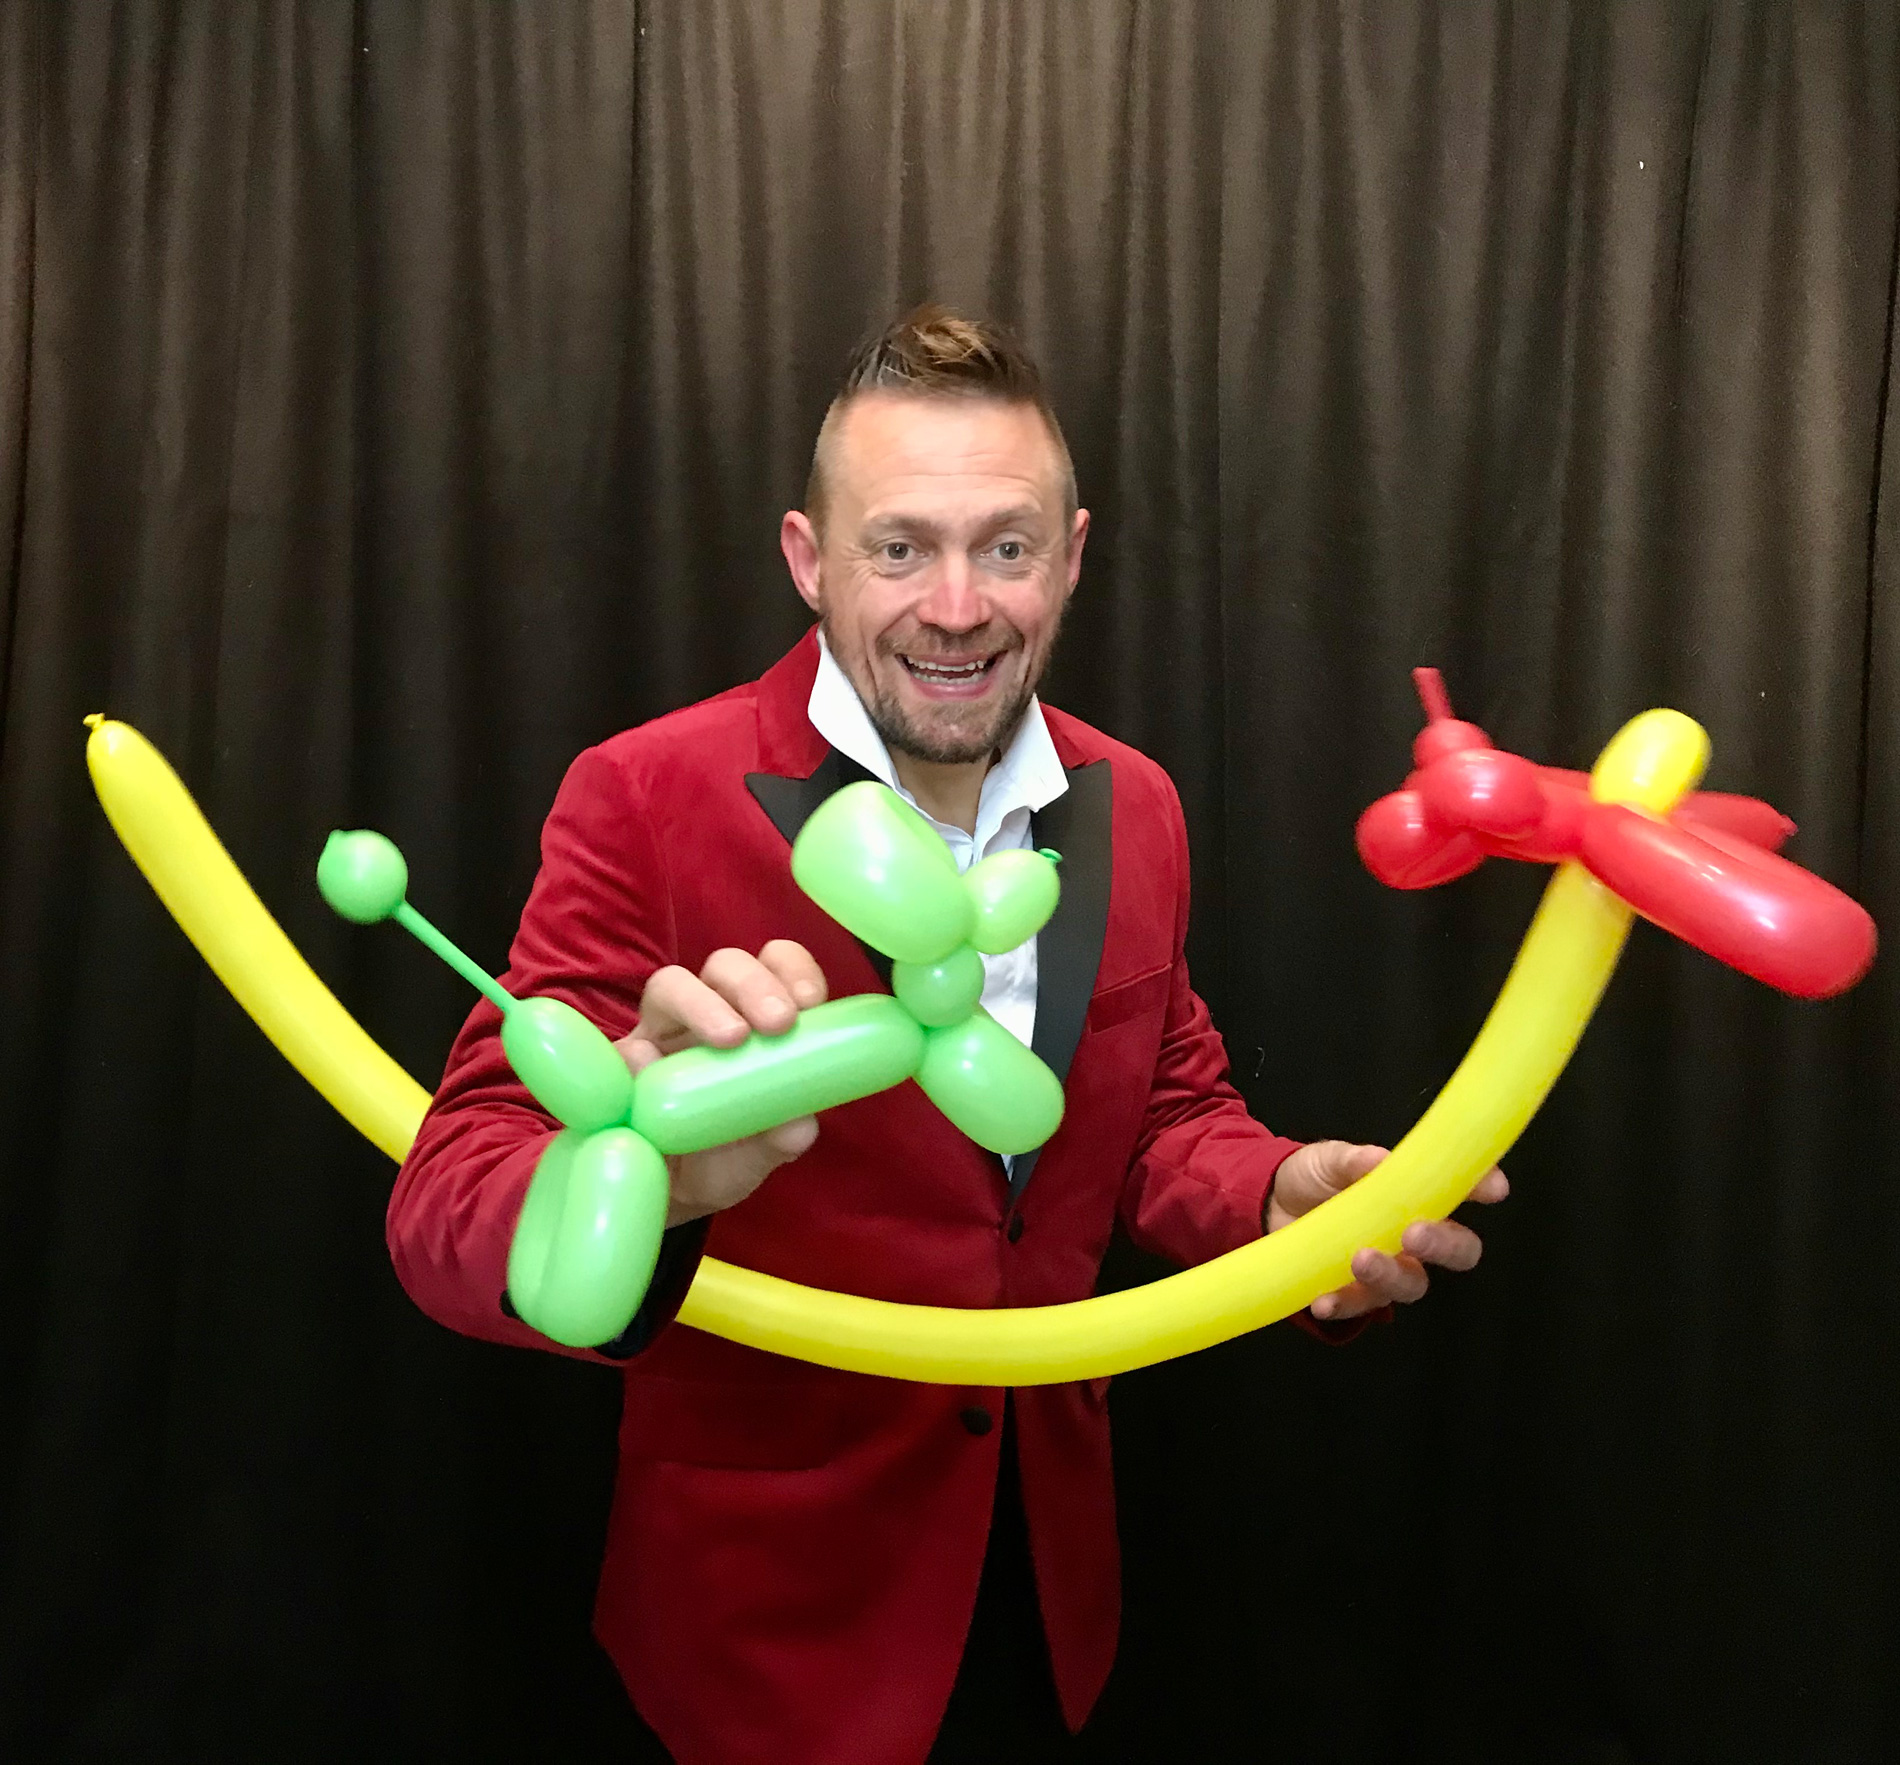 Thomas Trilby online shows circus skills performer